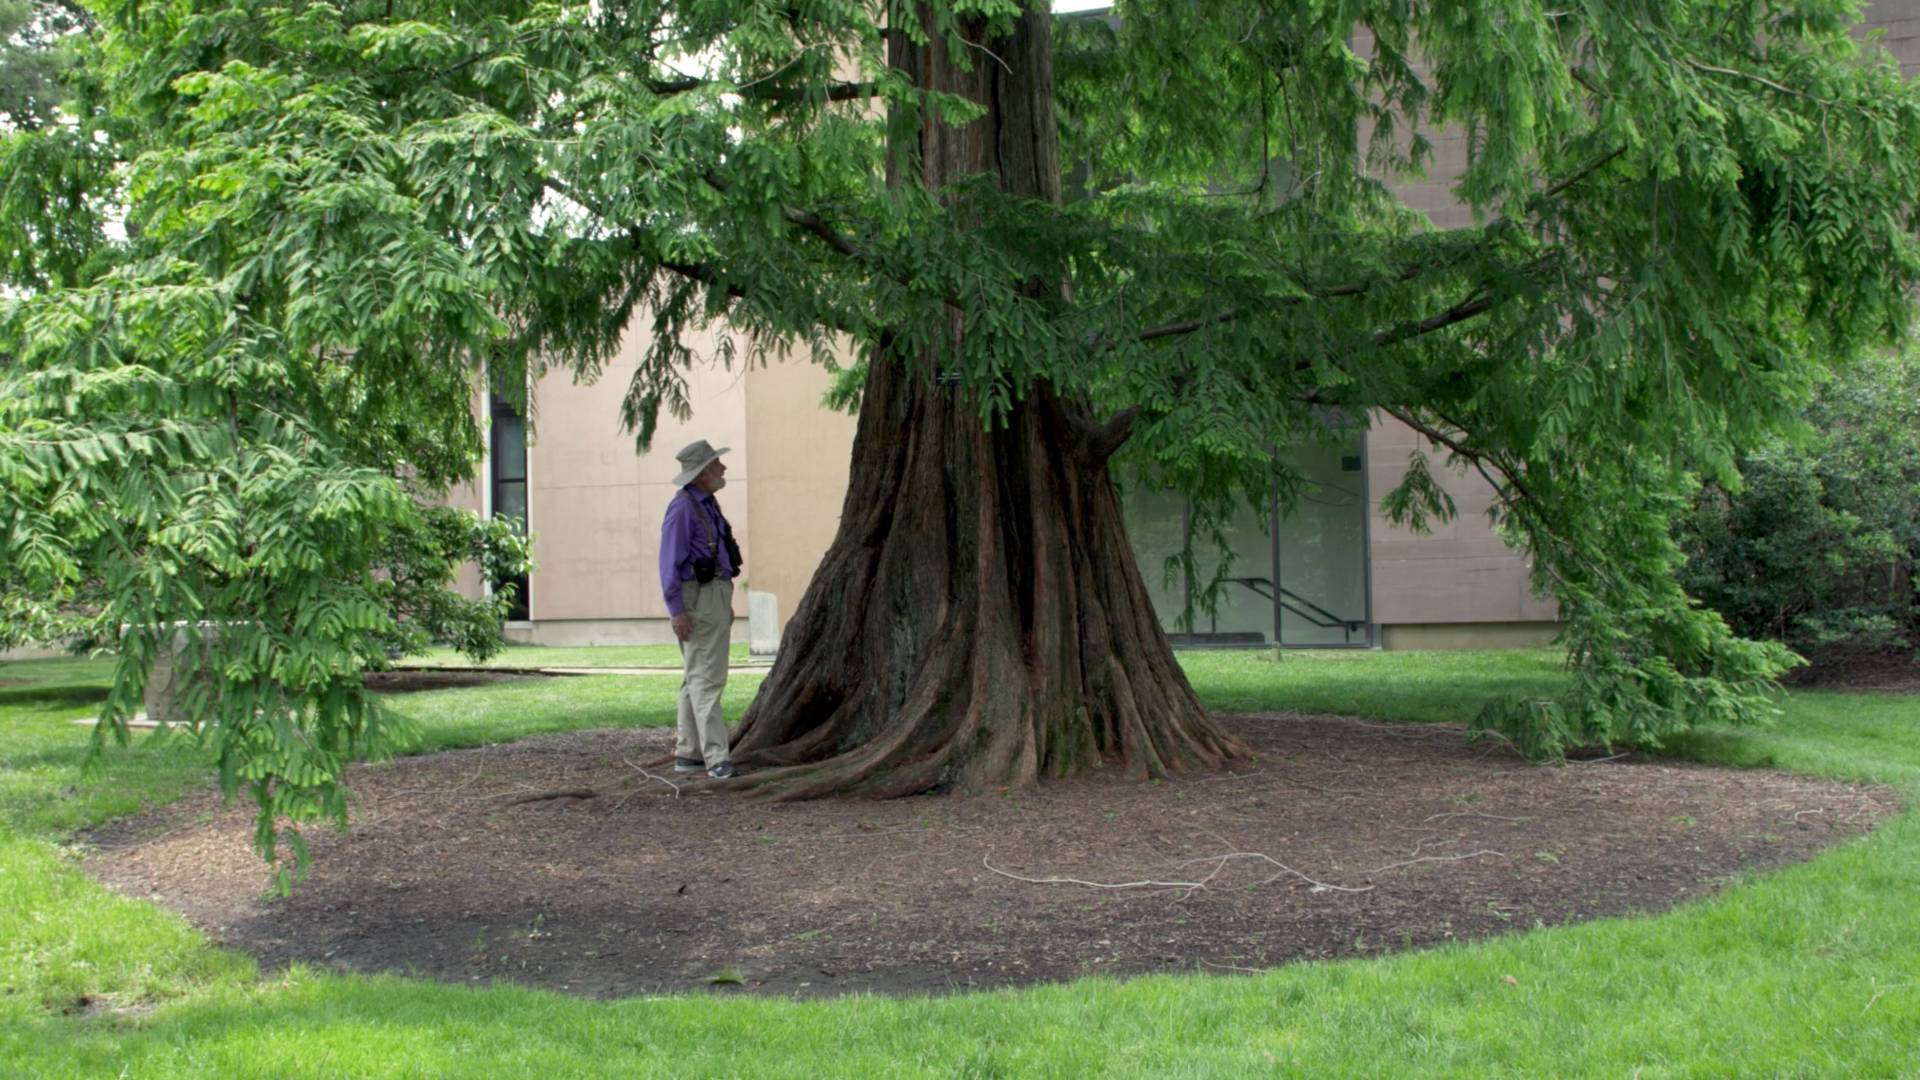 Henry Horn standing under large tree